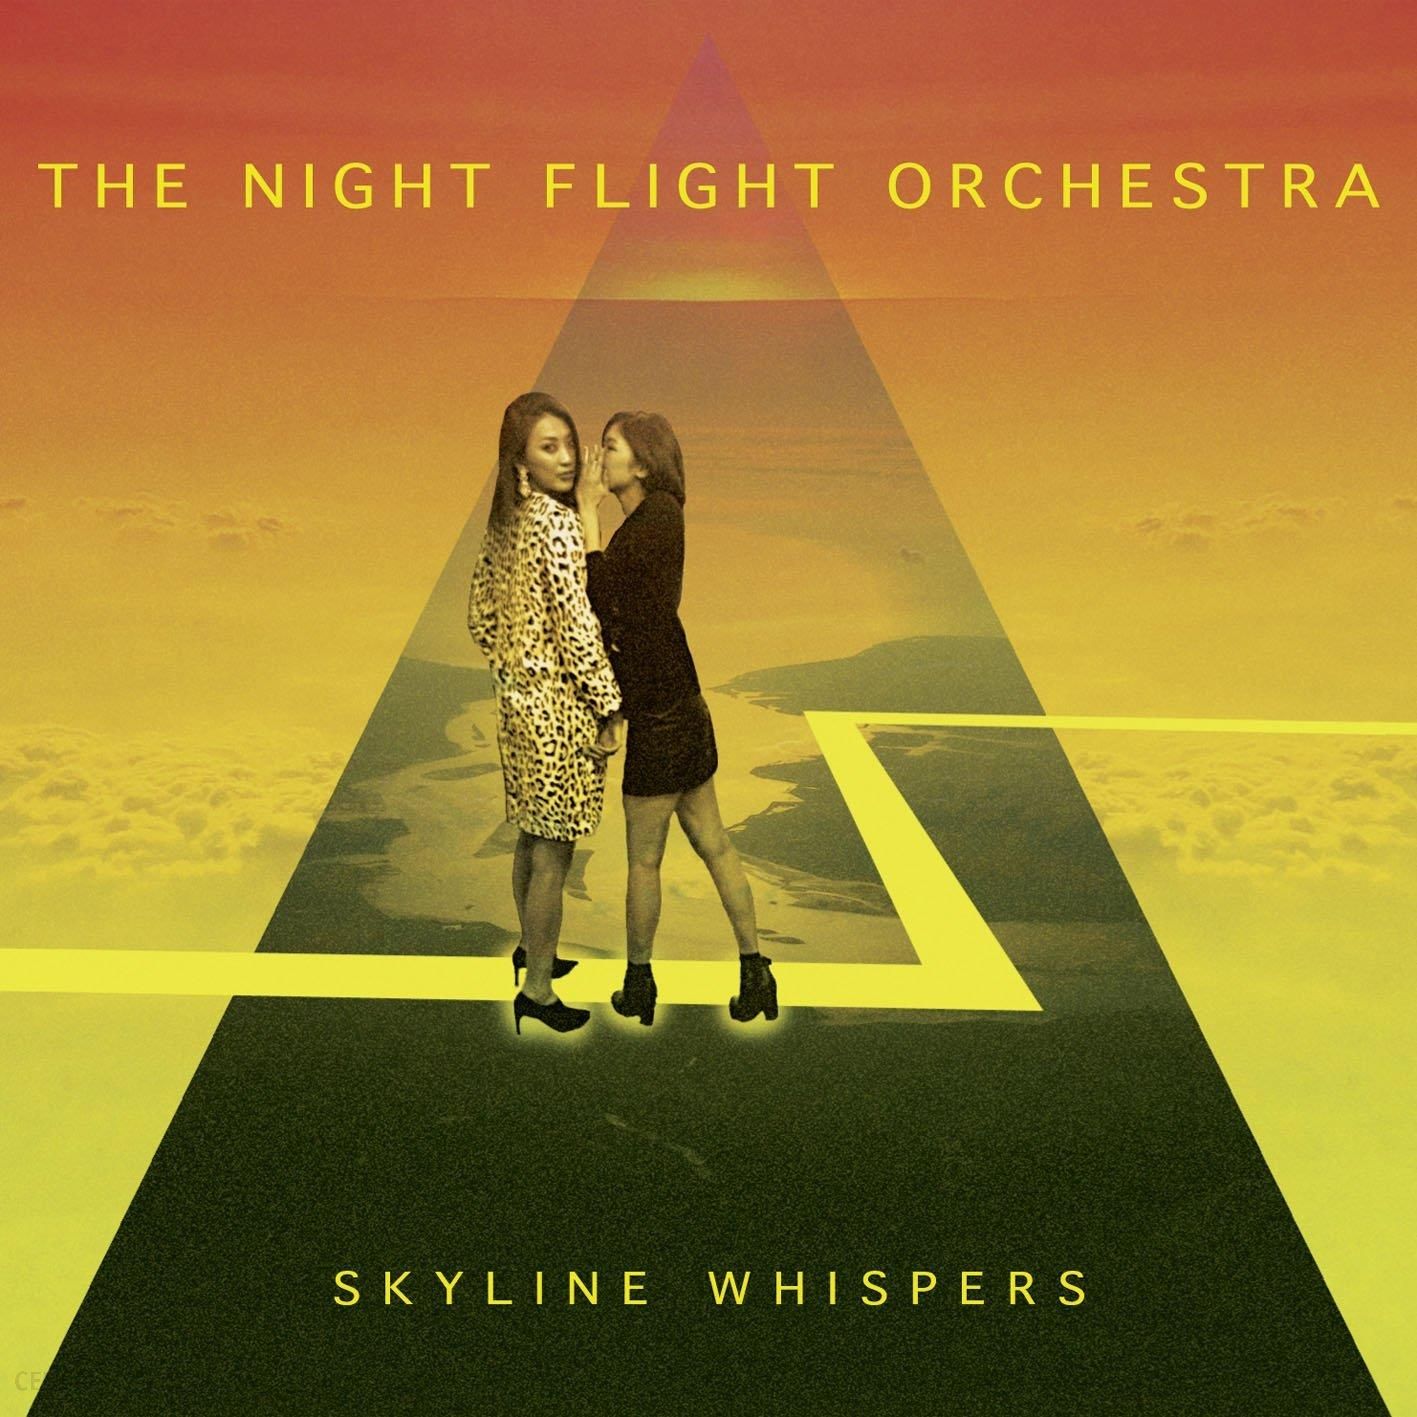 The night orchestra. The Night Flight Orchestra - Skyline Whispers (2015). The Night Flight Orchestra Aeromantic II. Виспер / Whisper (2015). The Night Flight Orchestra Band.